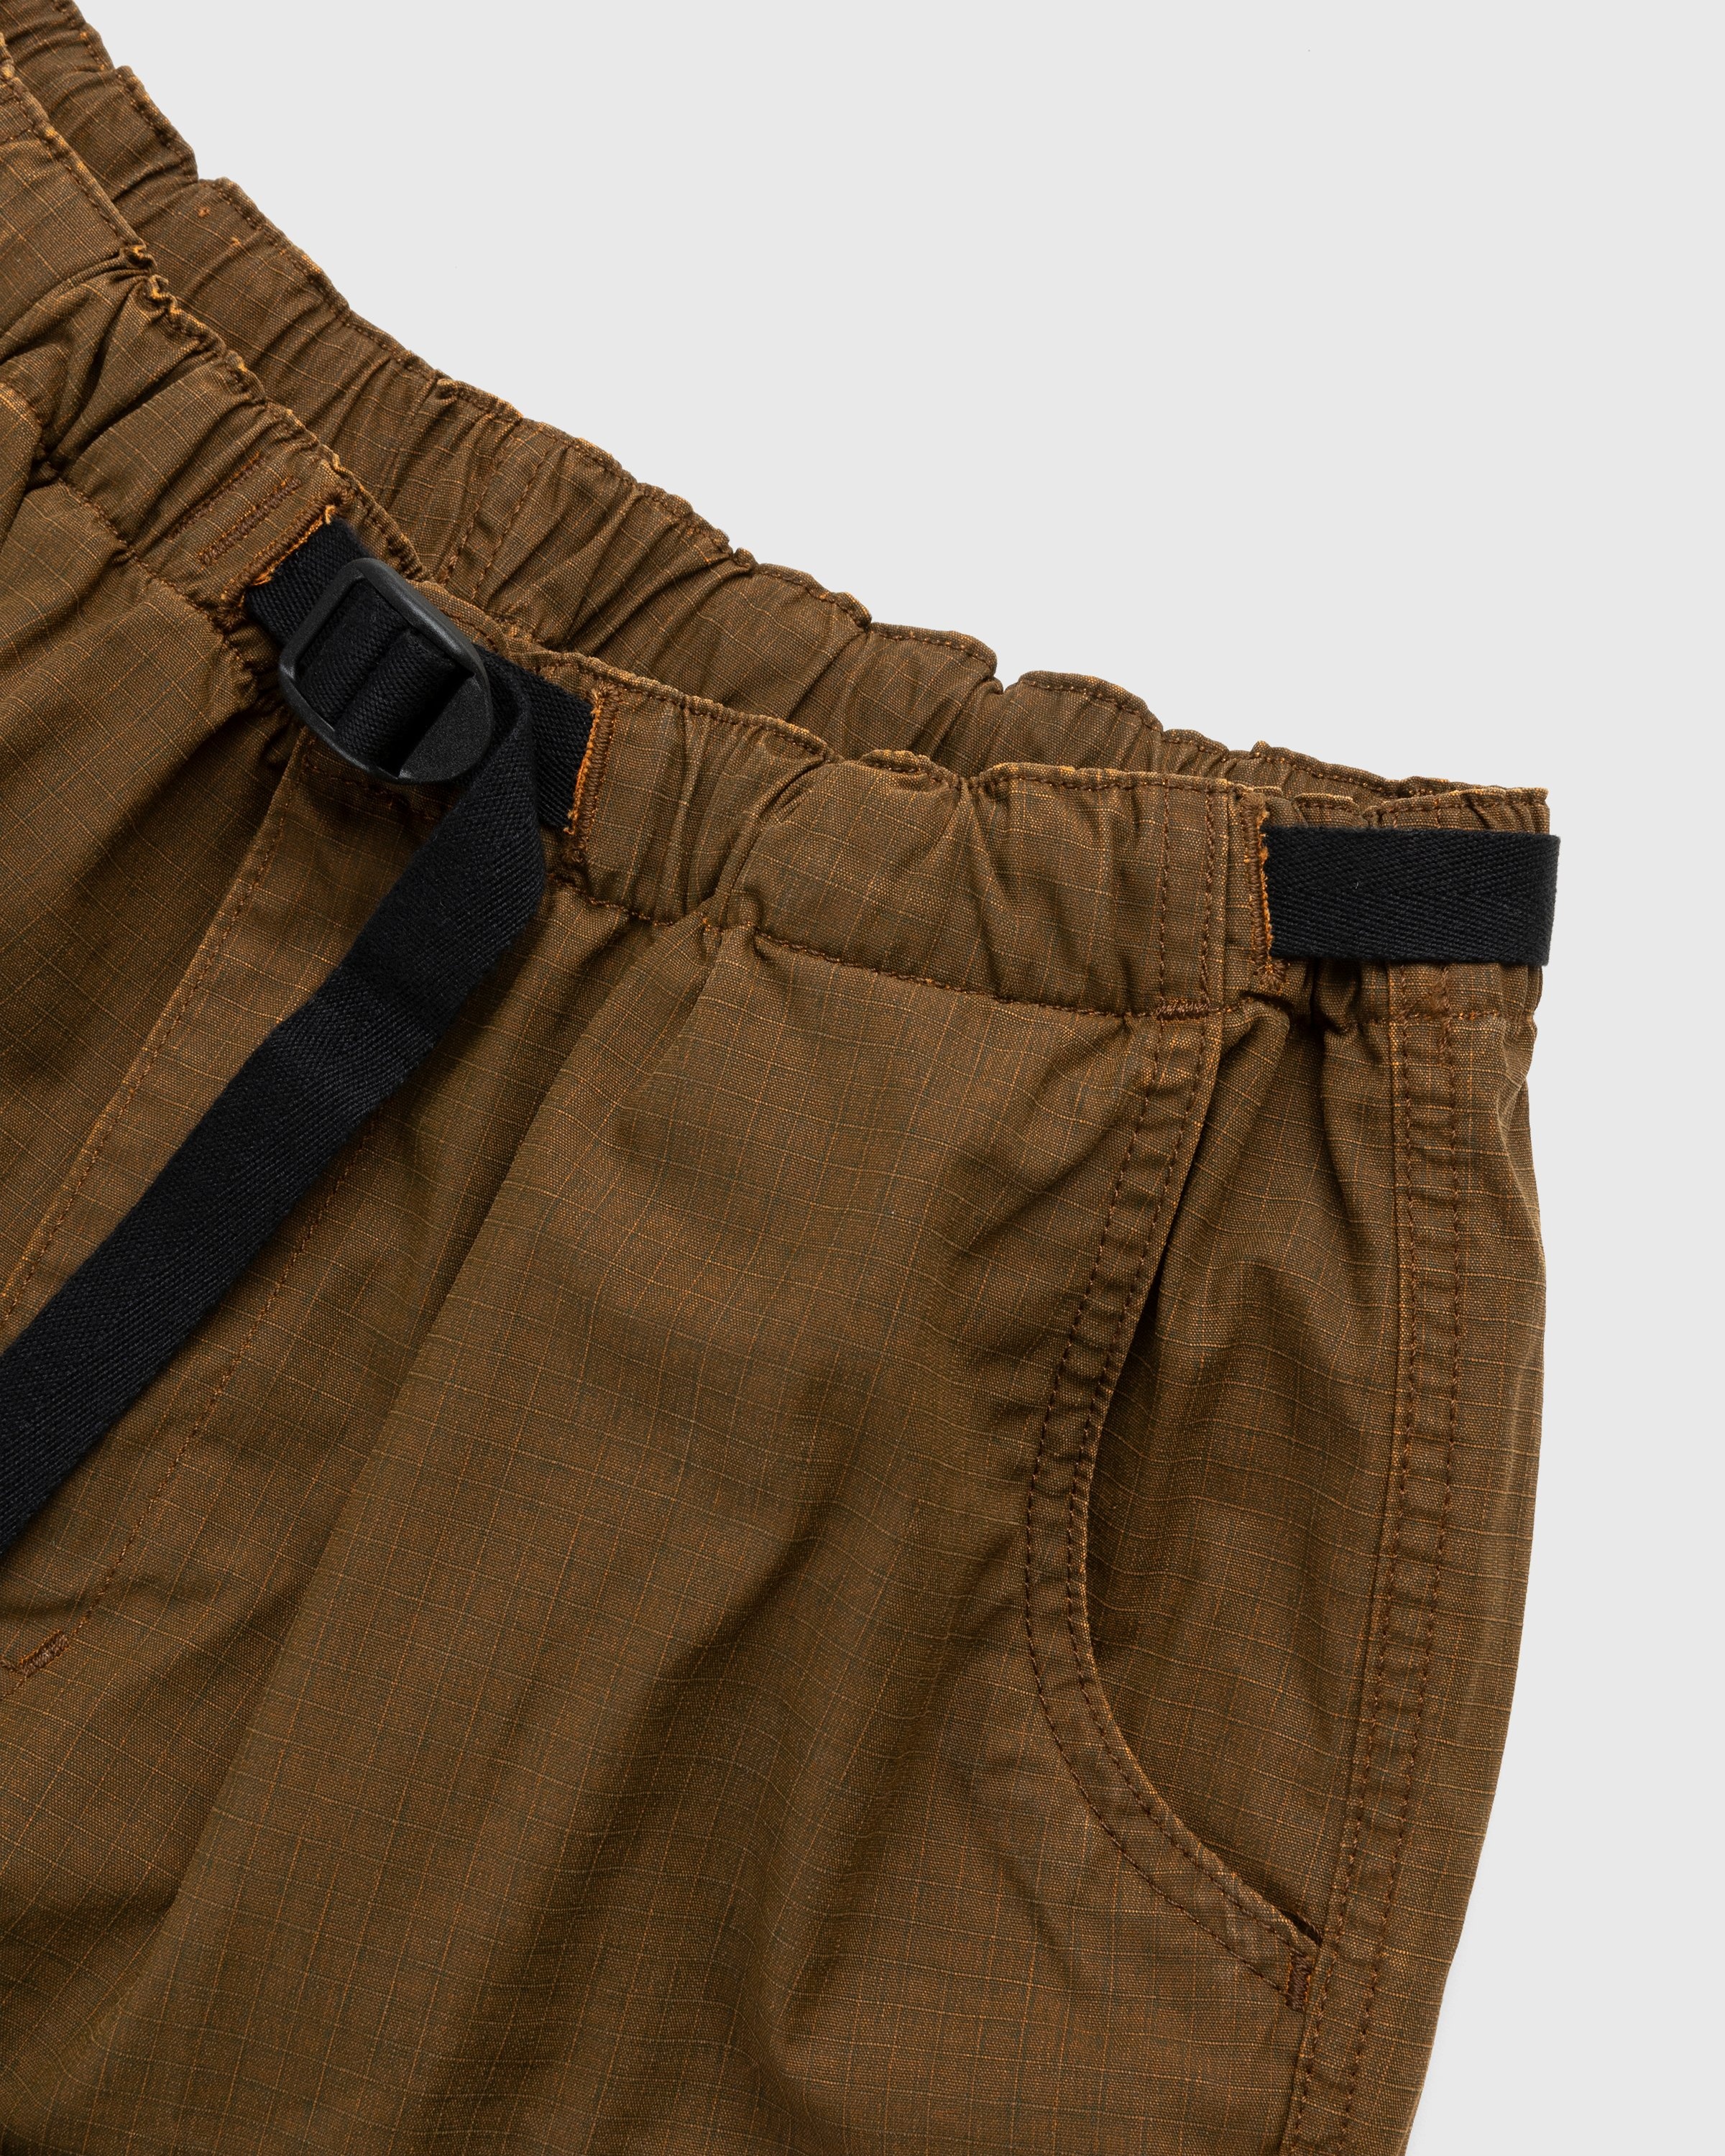 Carhartt WIP – Wynton Short Hamilton Brown - Cargo Shorts - Brown - Image 5